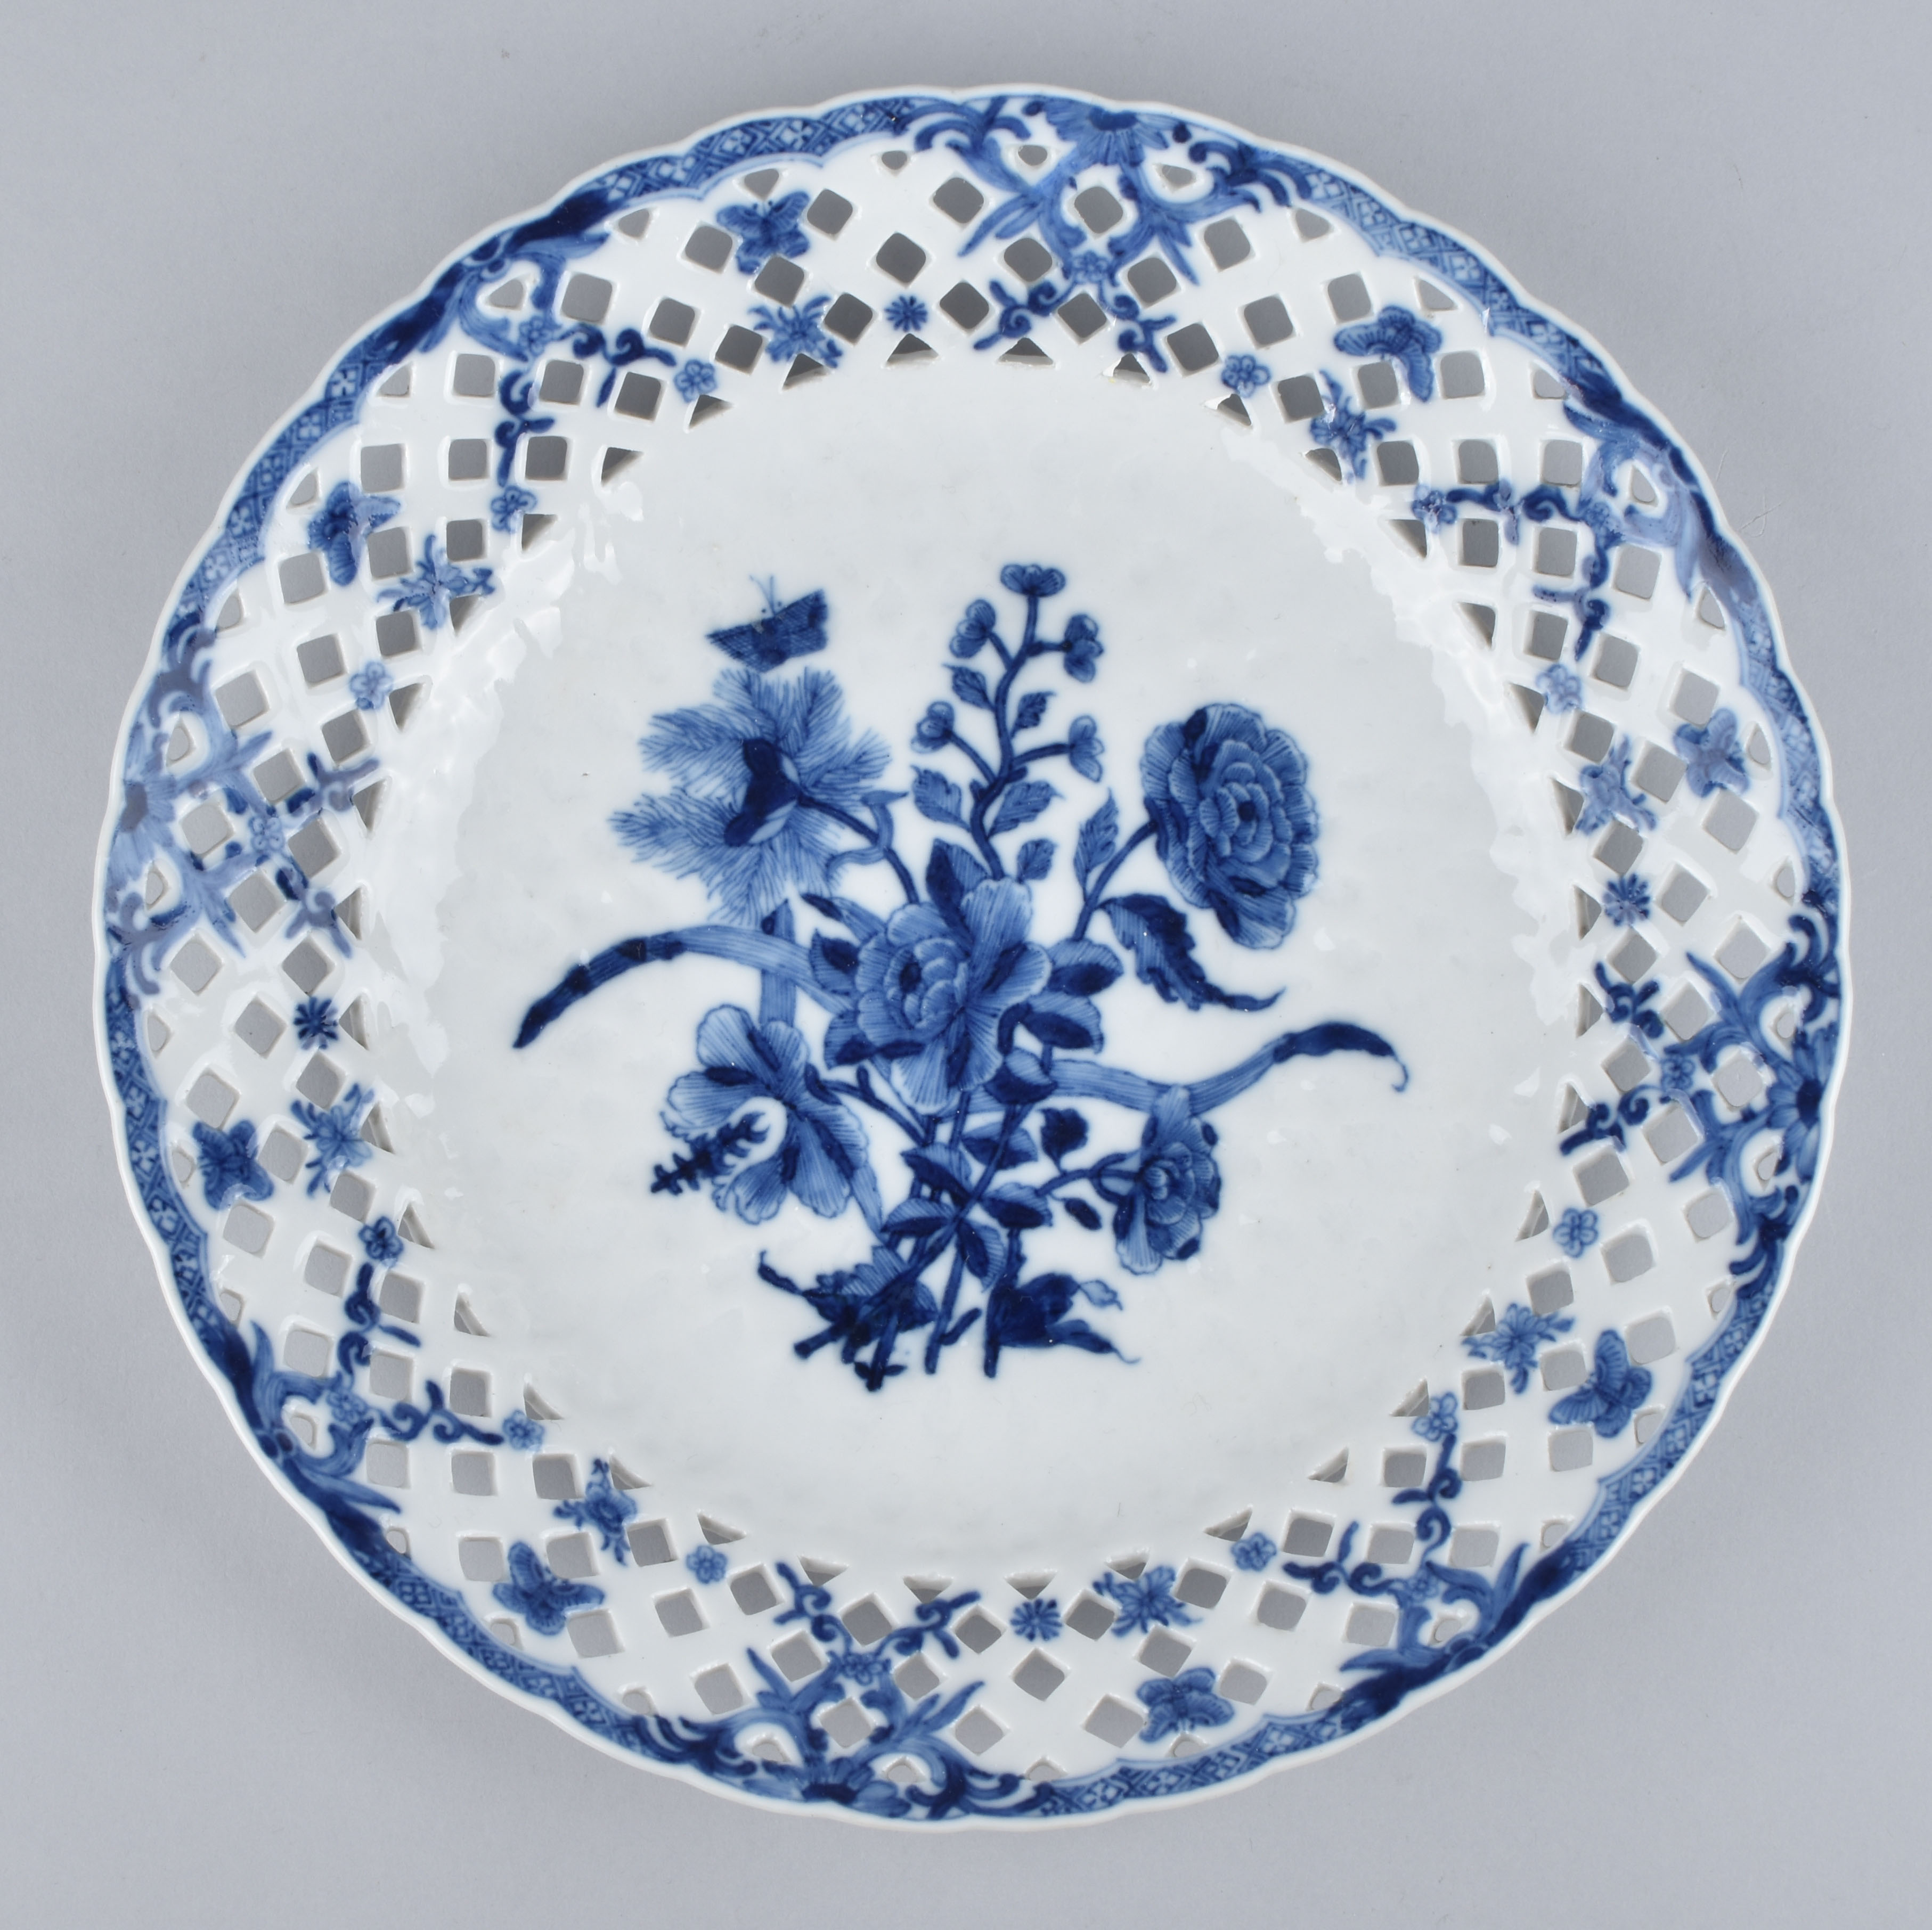 Porcelaine Qianlong (1735-1795), circa 1765/1770, Chine